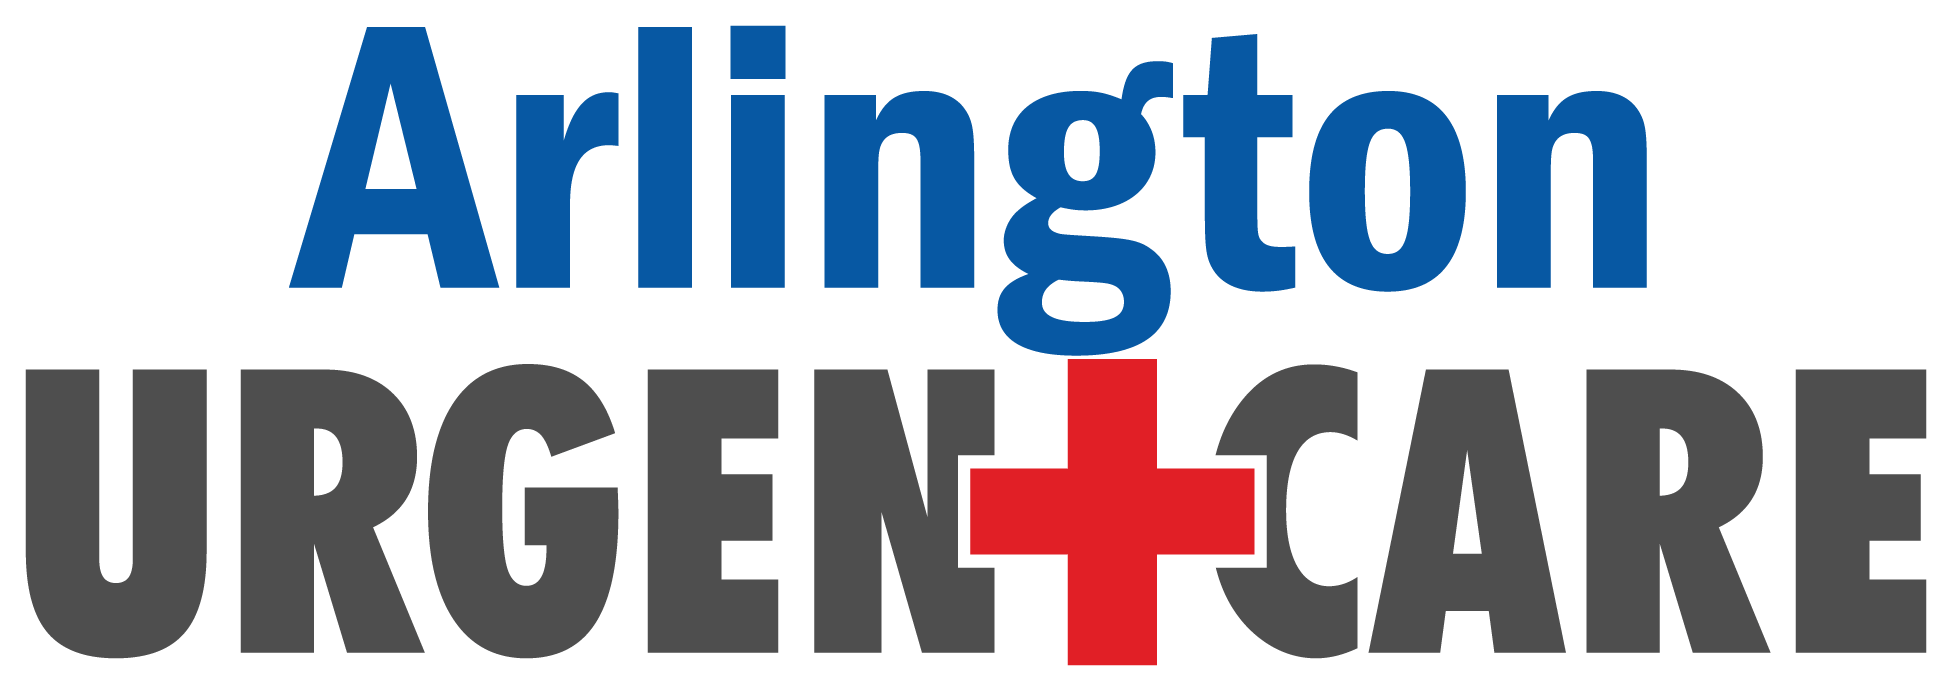 Arlington Urgent Care logo